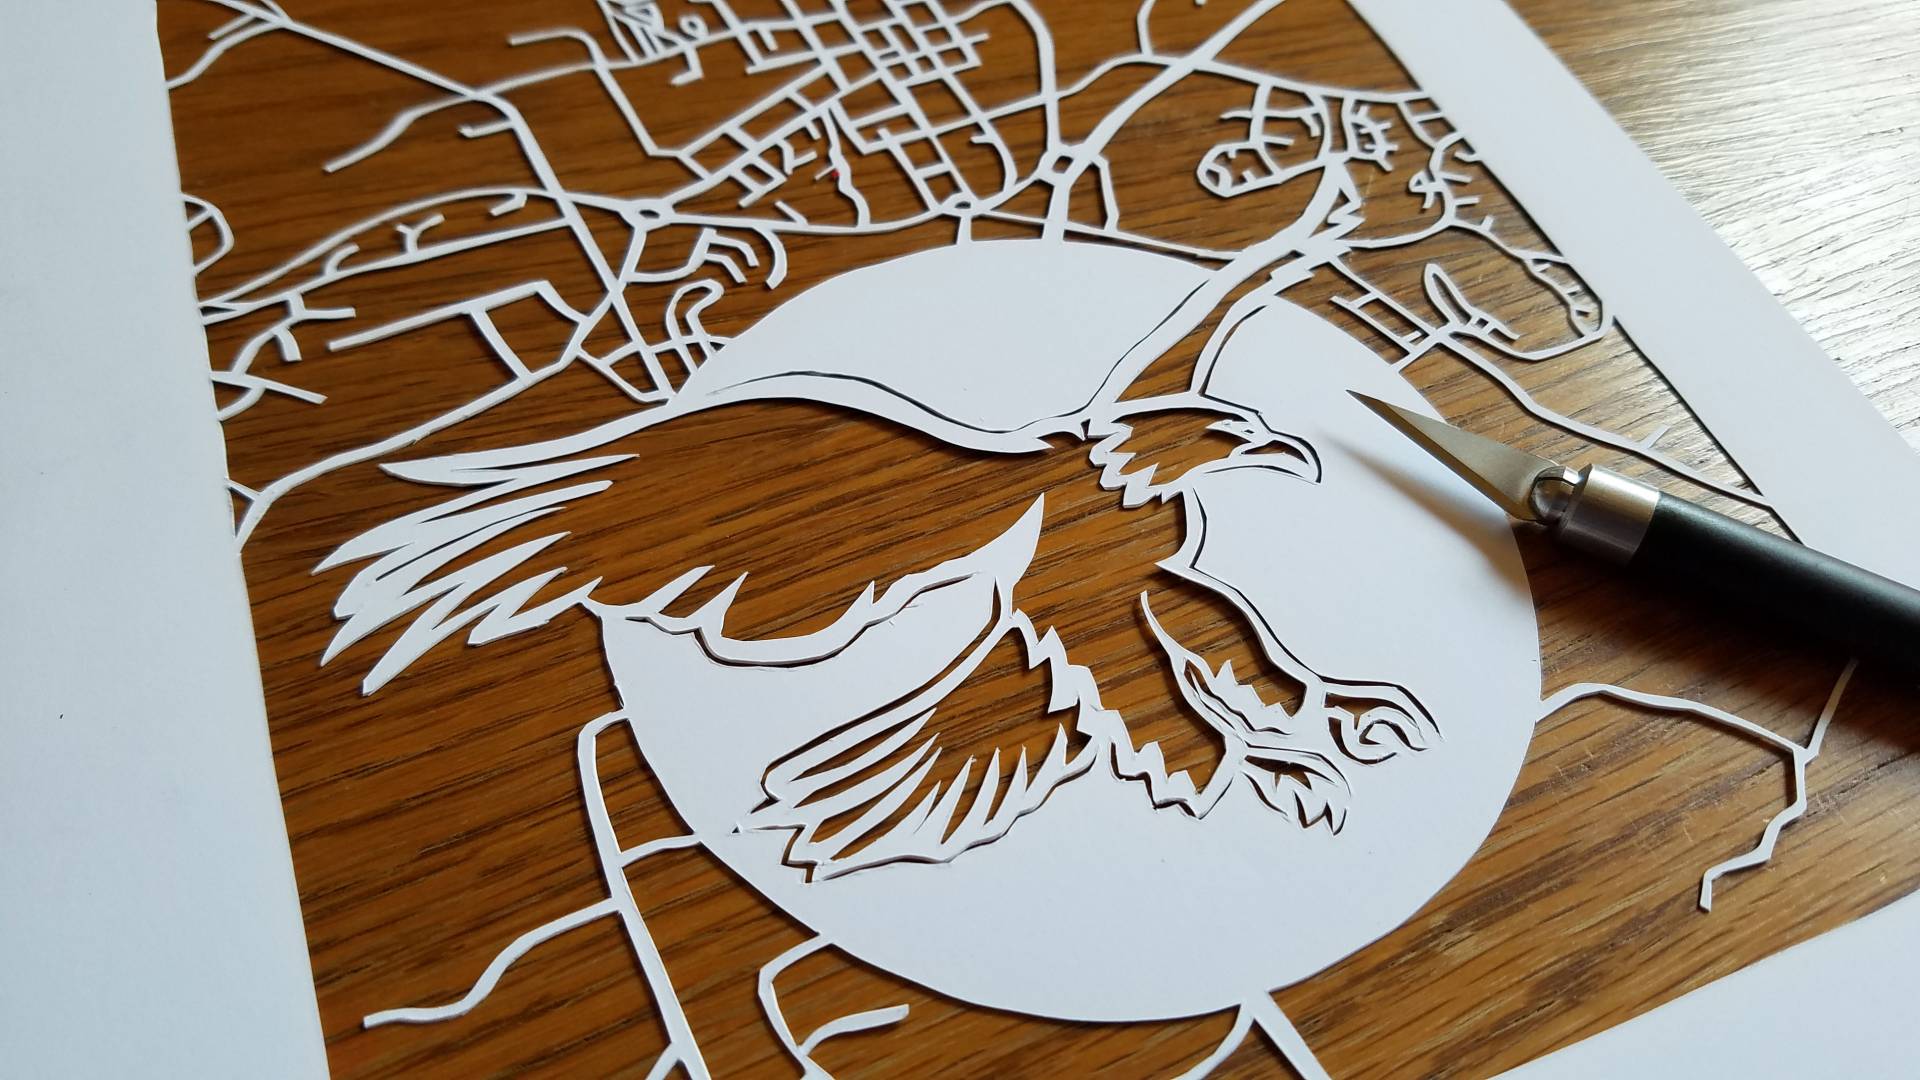 Paper cut art of an eagle